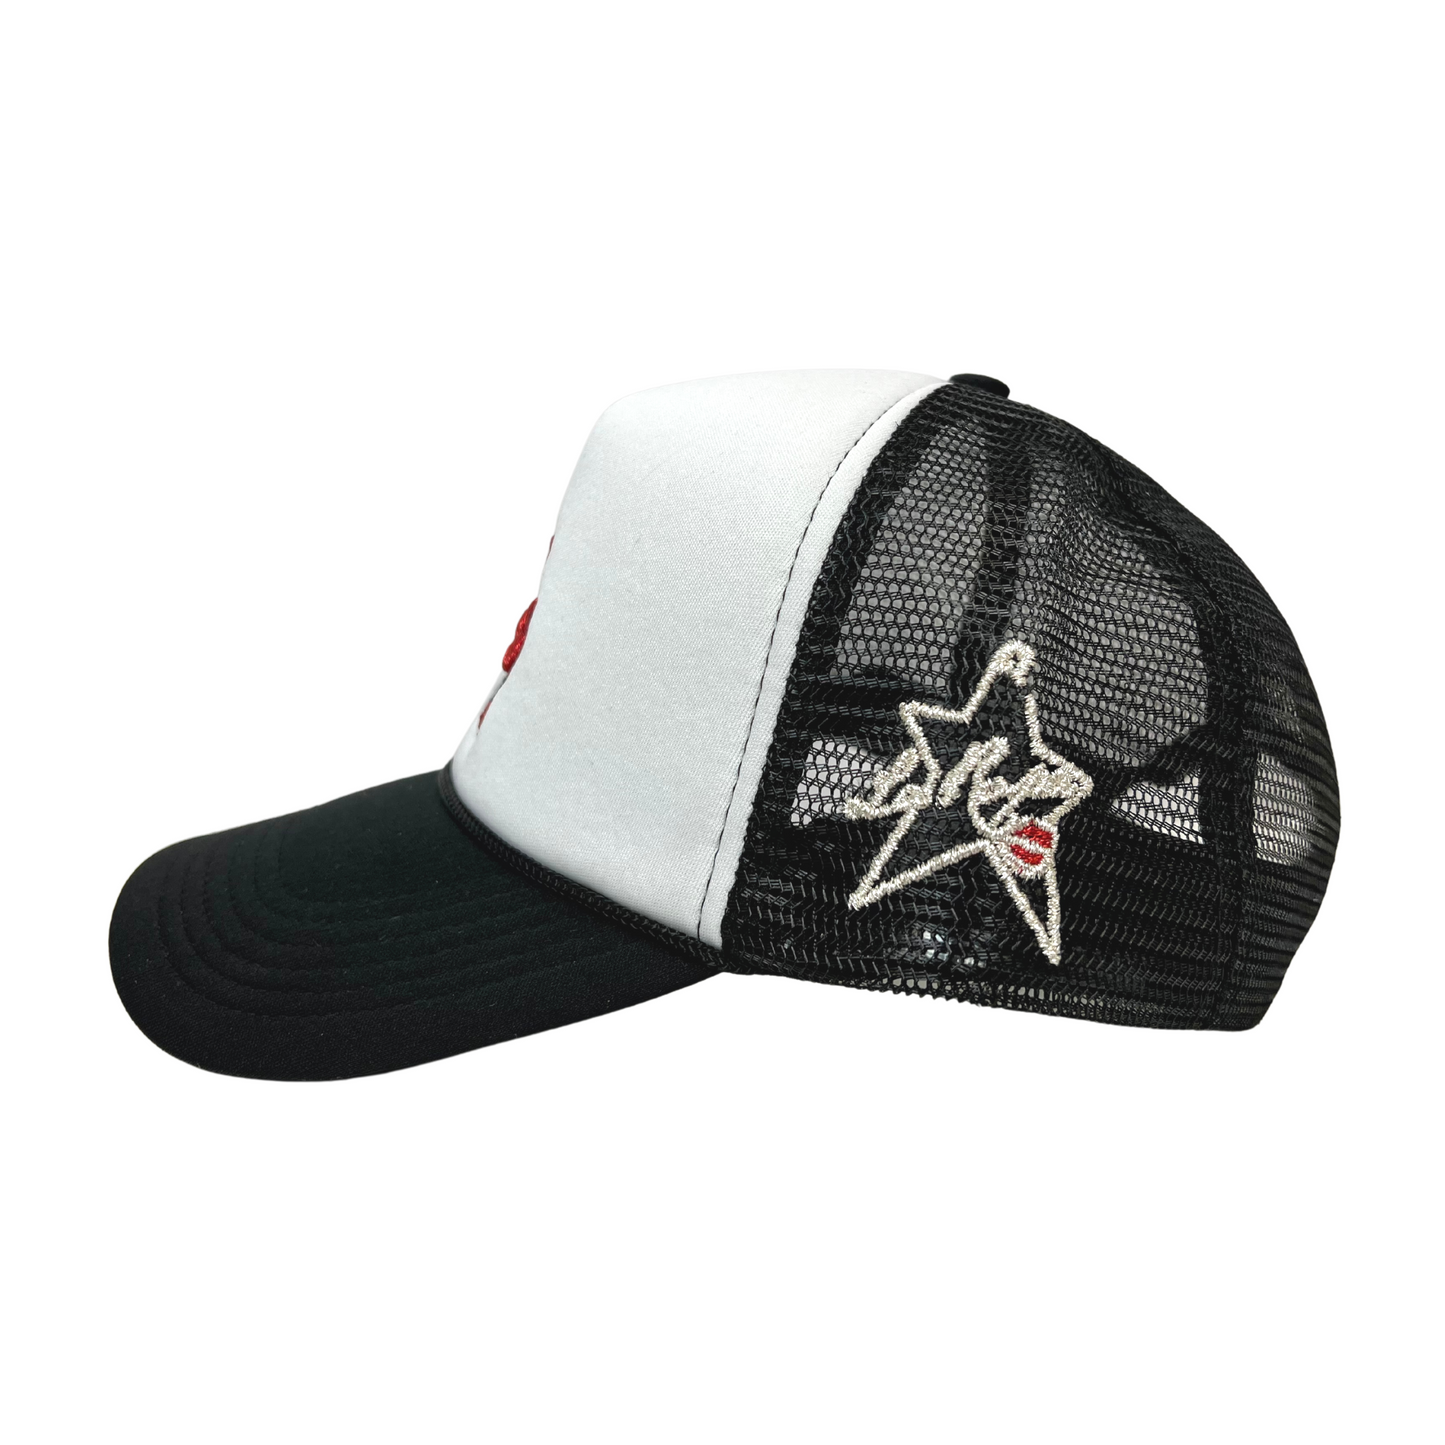 La Ropa LA Trucker Hat (Black/White)